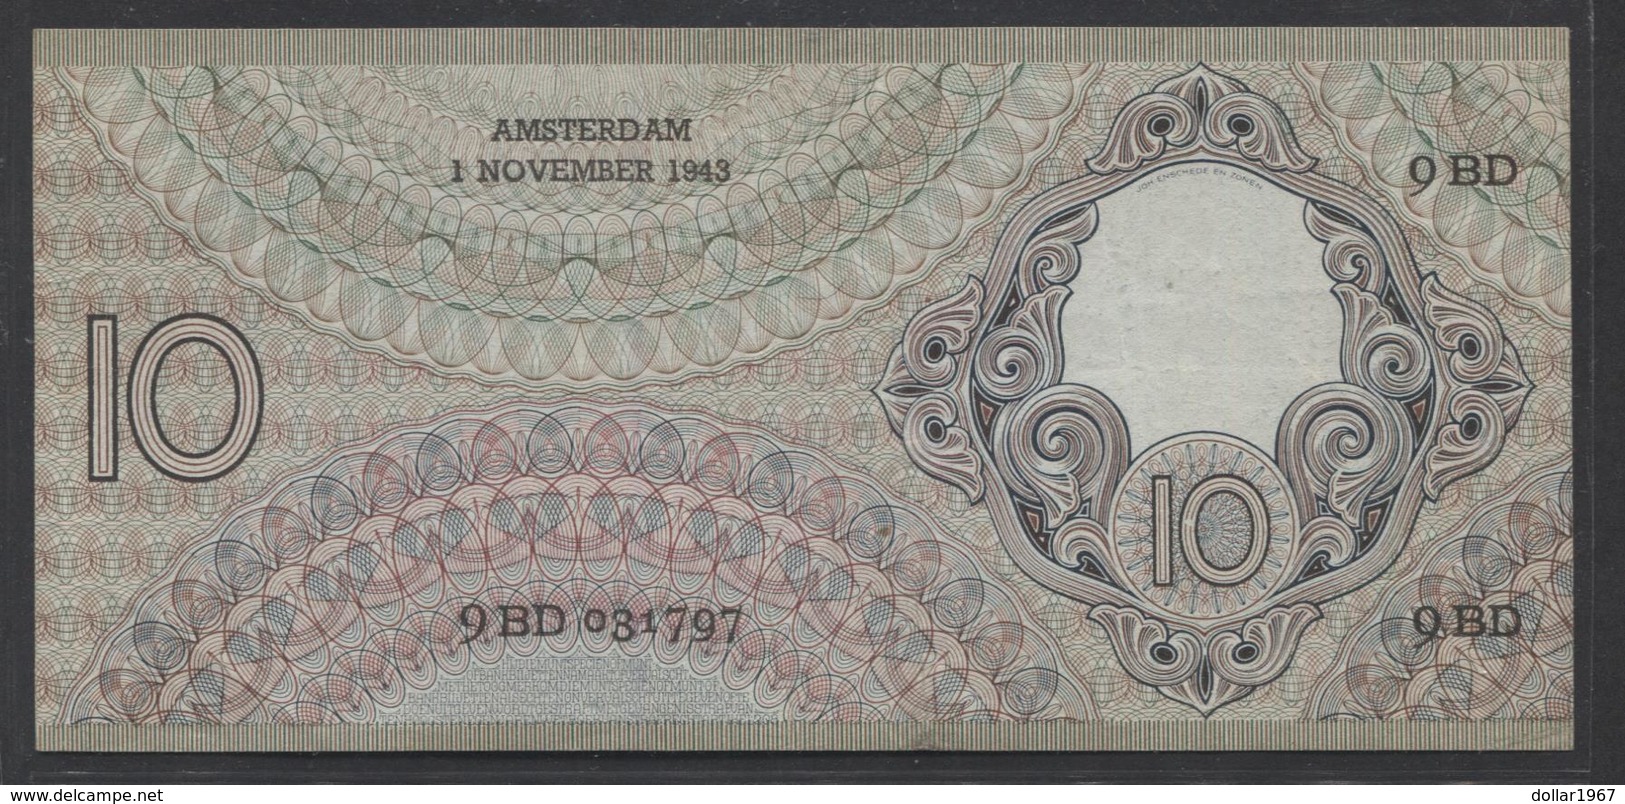 Netherlands 10 Gulden 4-1-1943 -22-4-1944 , No 9 BD 031797 - 01-11-1943, - See The 2 Scans For Condition.(Originalscan ) - 10 Gulden